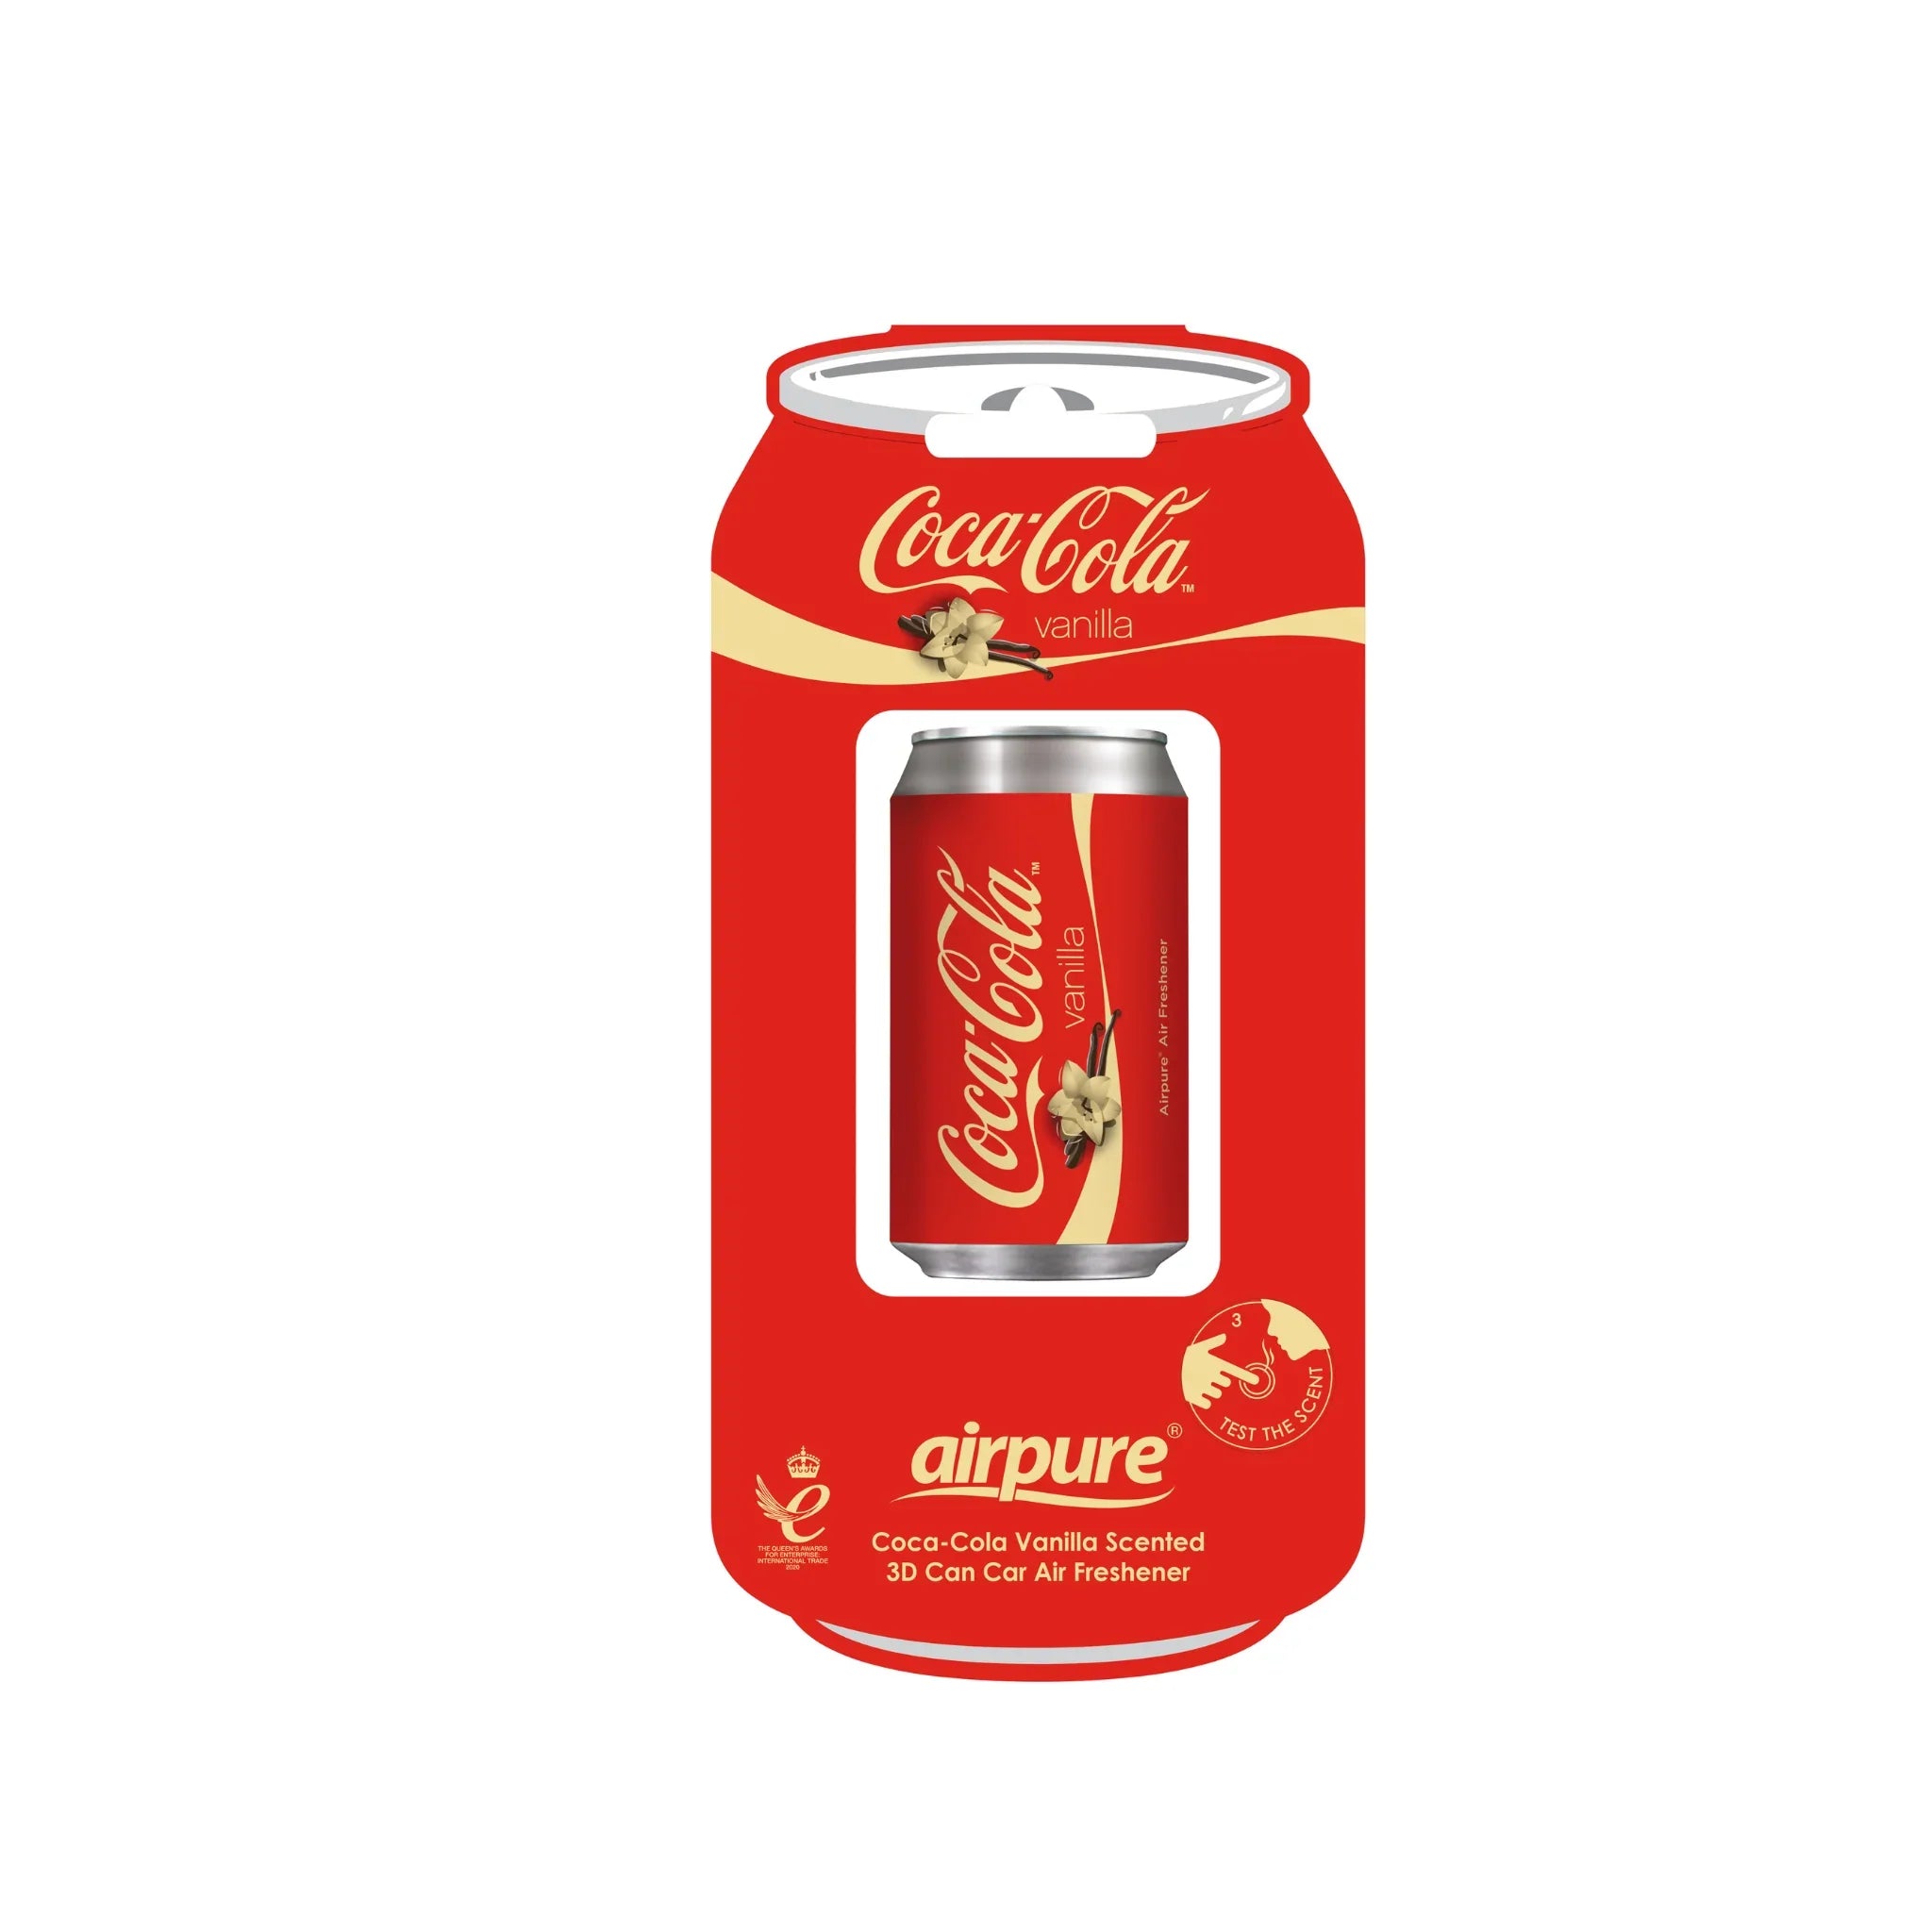 Airpure 3D Vent Can Air Freshener - Coca Cola Vanilla